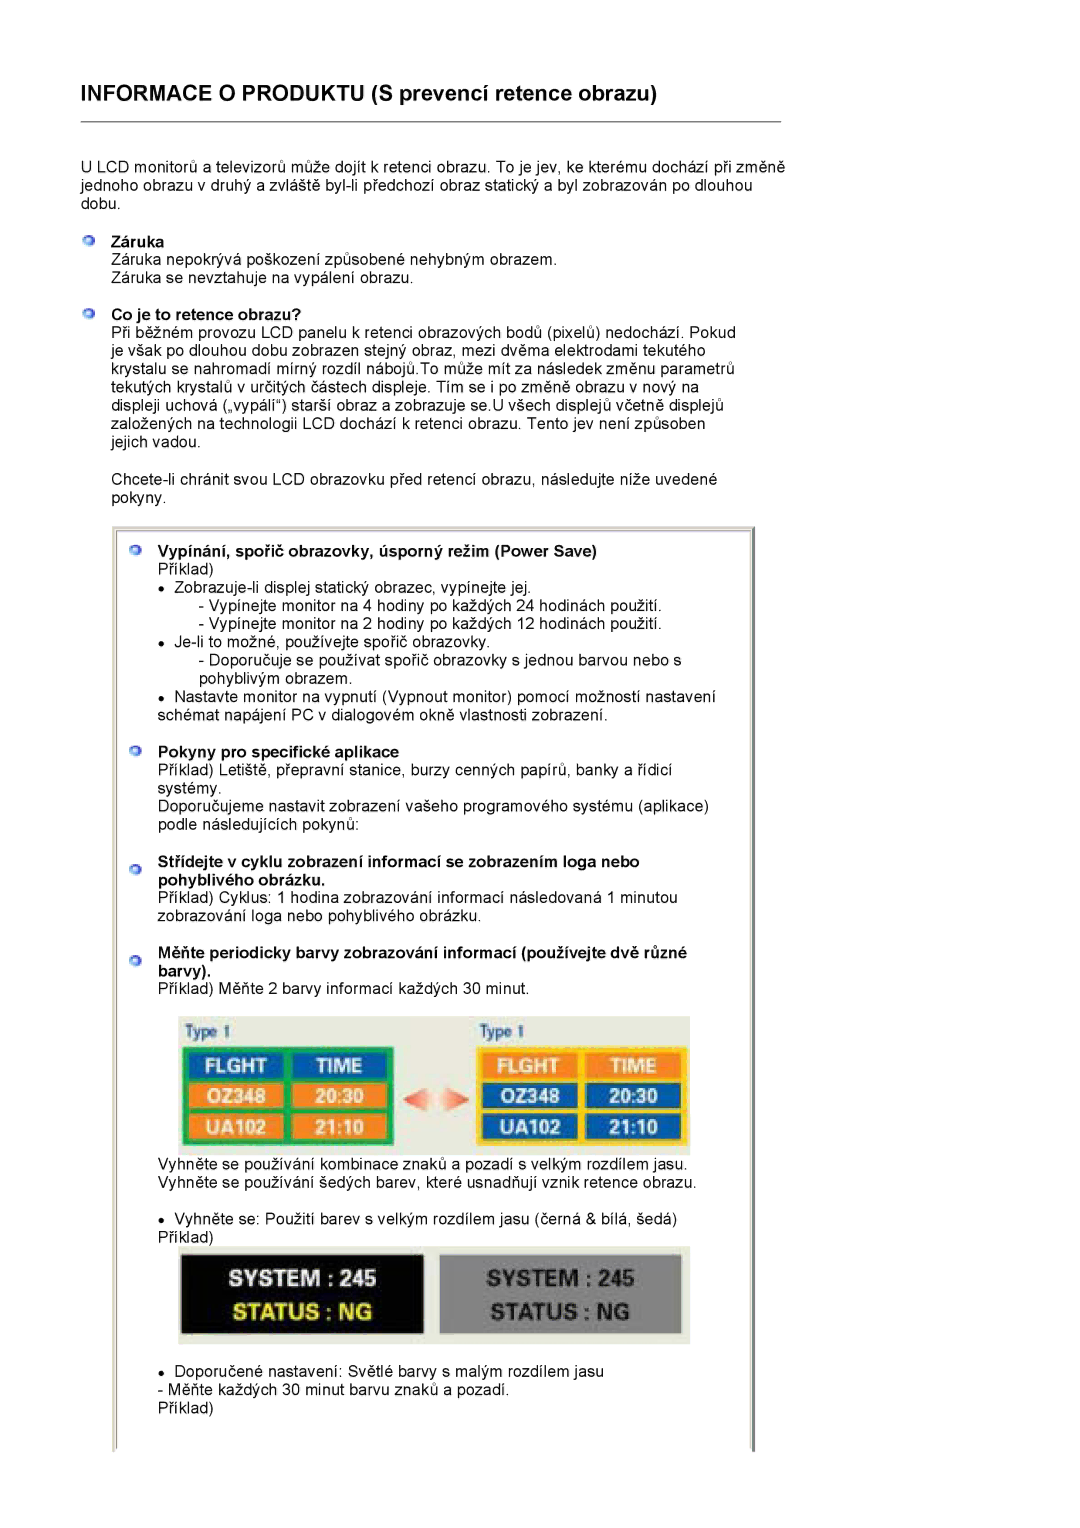 Samsung LS17HADKSX/EDC manual Záruka, Co je to retence obrazu?, Vypínání, spořič obrazovky, úsporný režim Power Save 